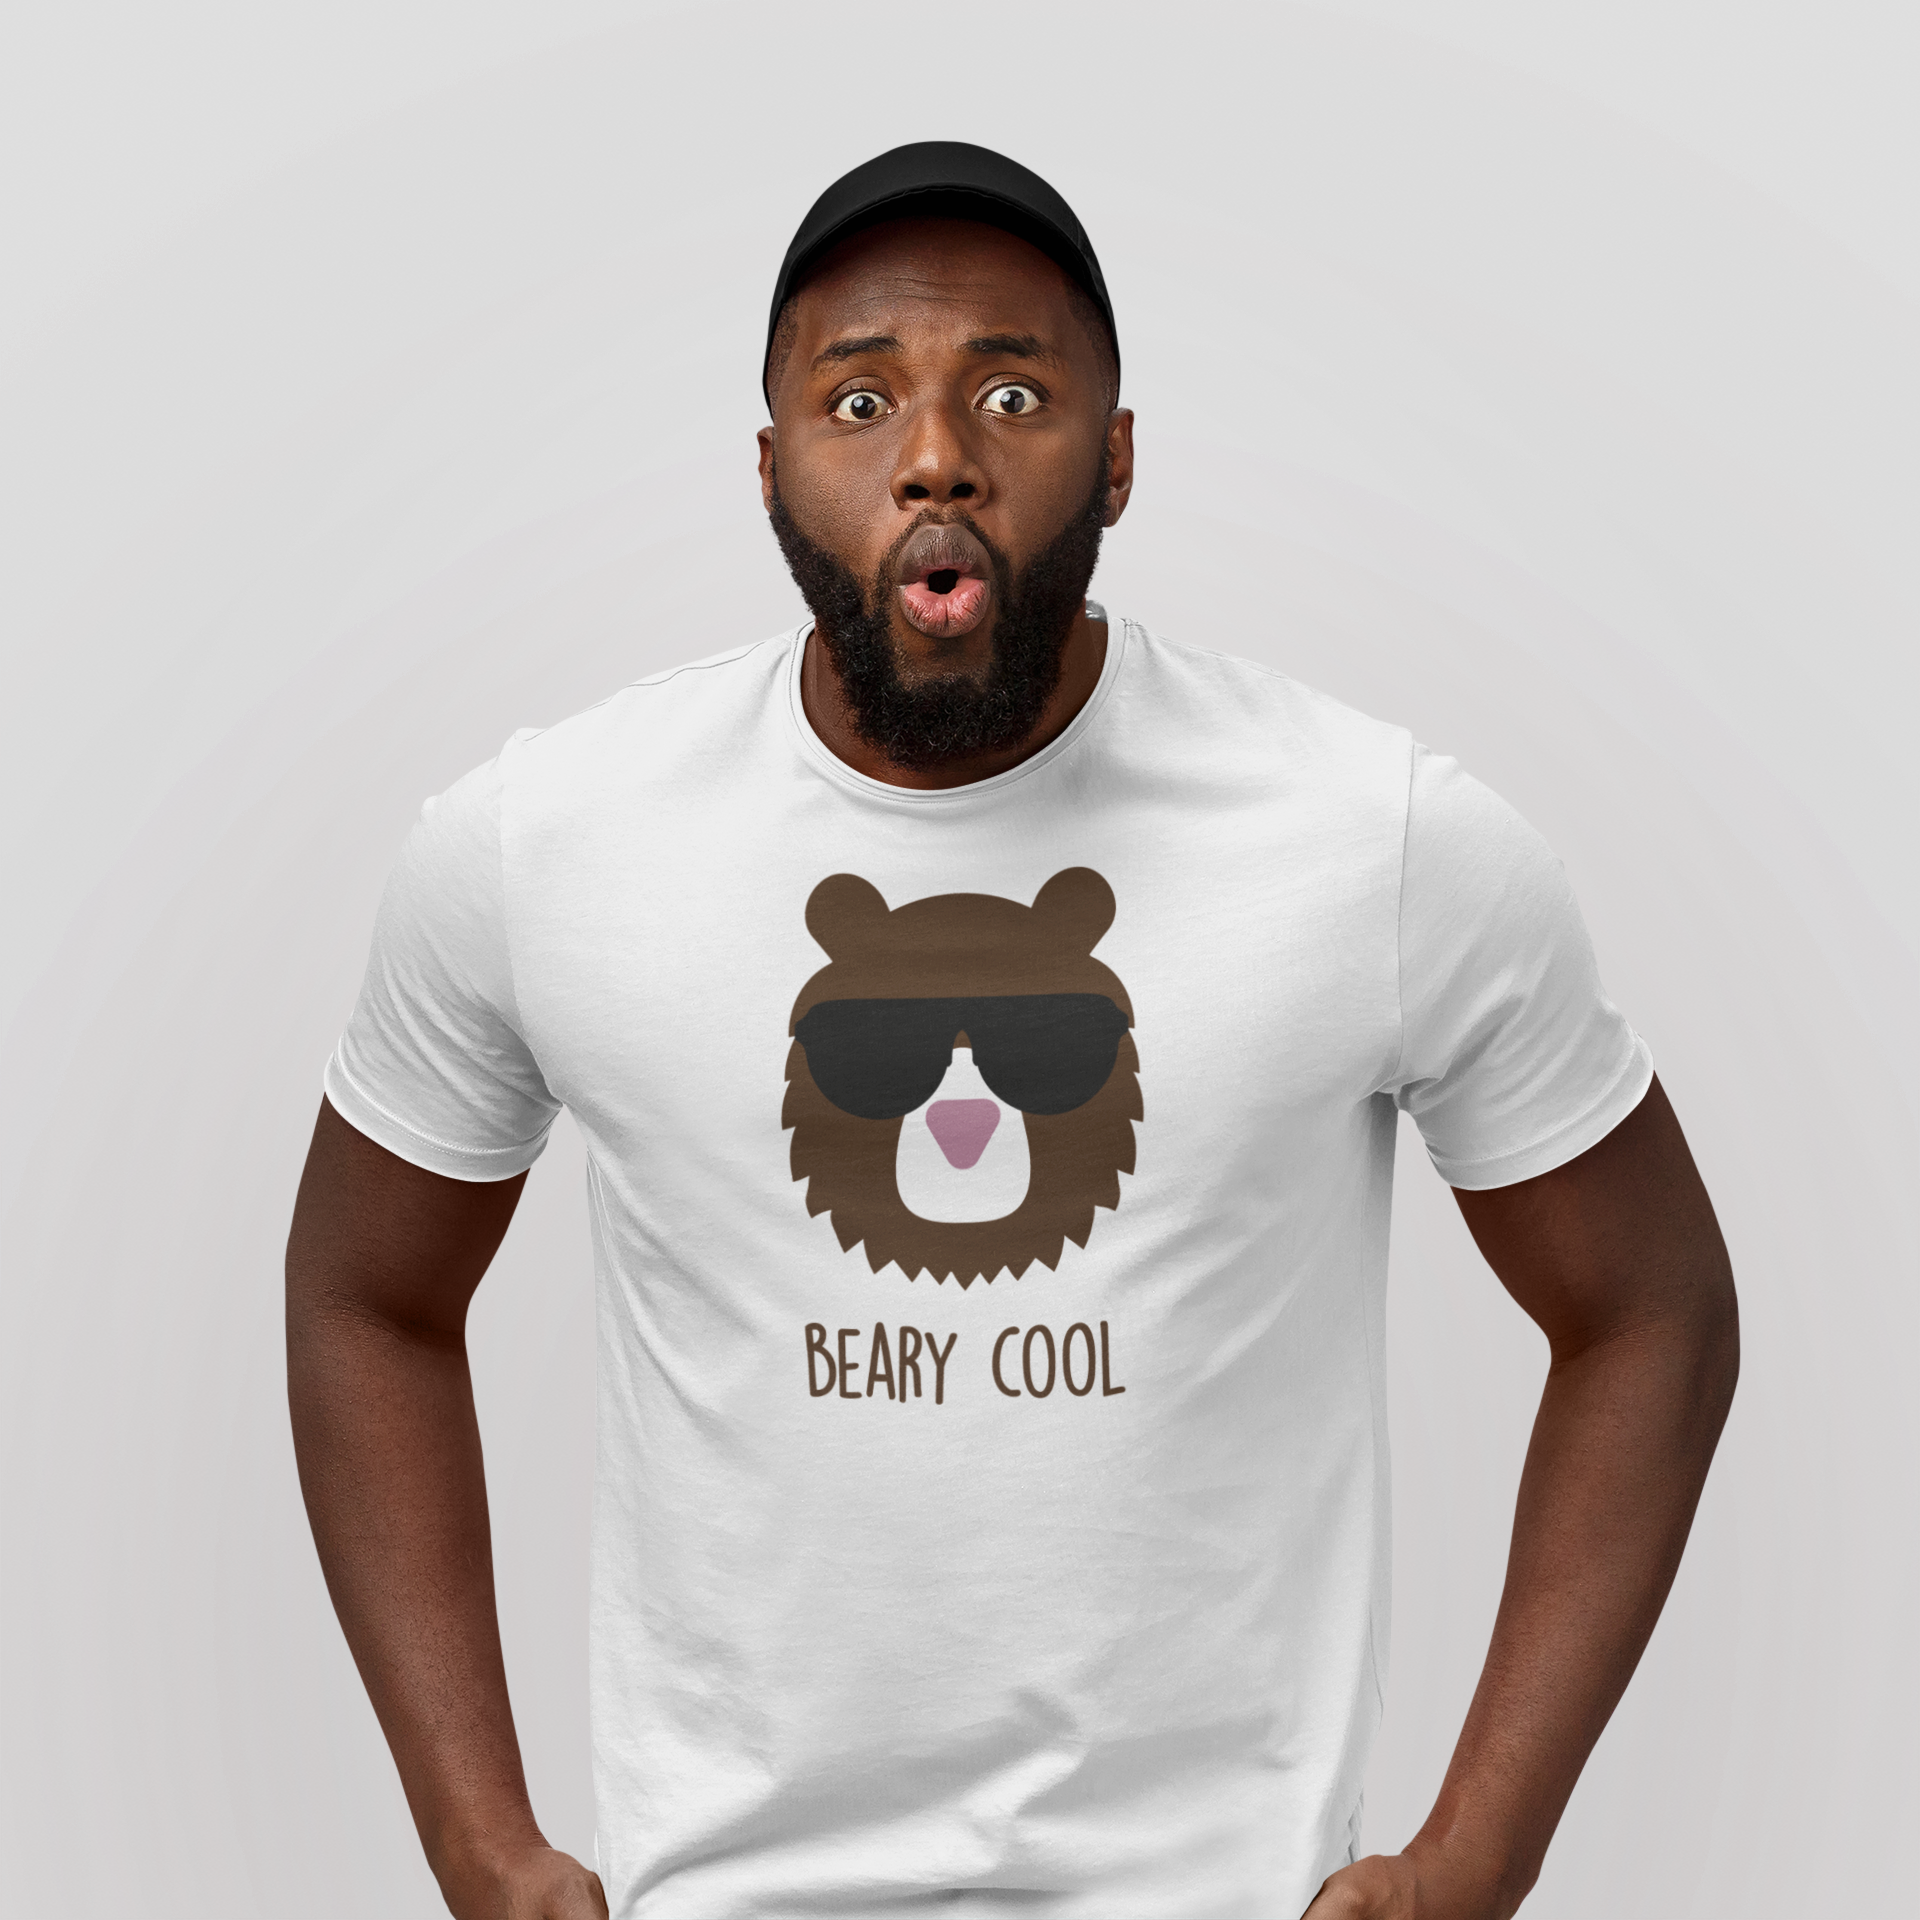 'Beary cool' adult shirt